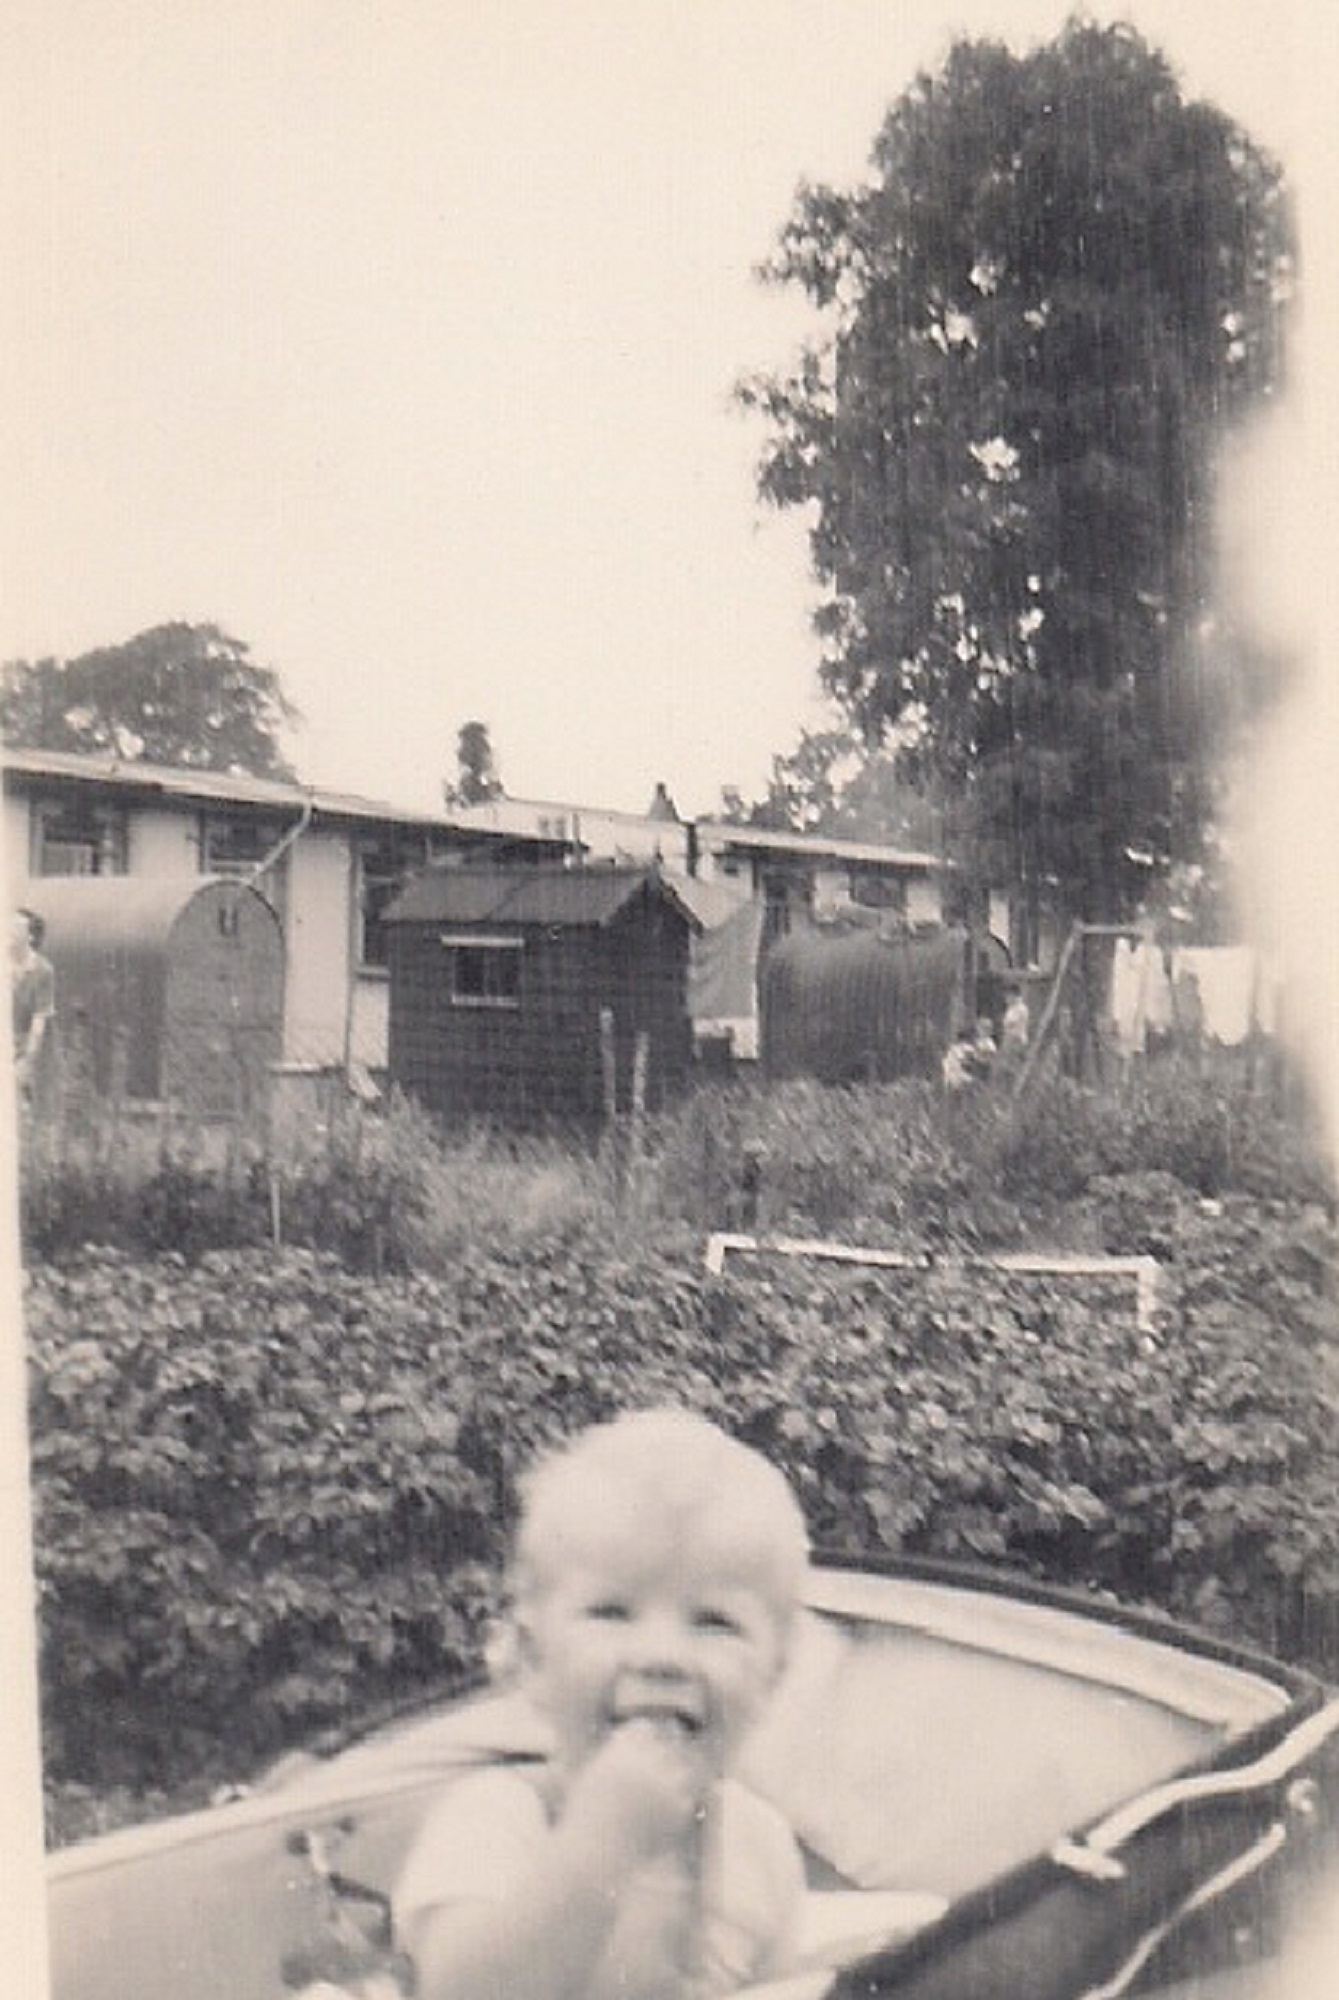 Martyn in his pram in the prefab garden. Stapleford Road, Kings Norton